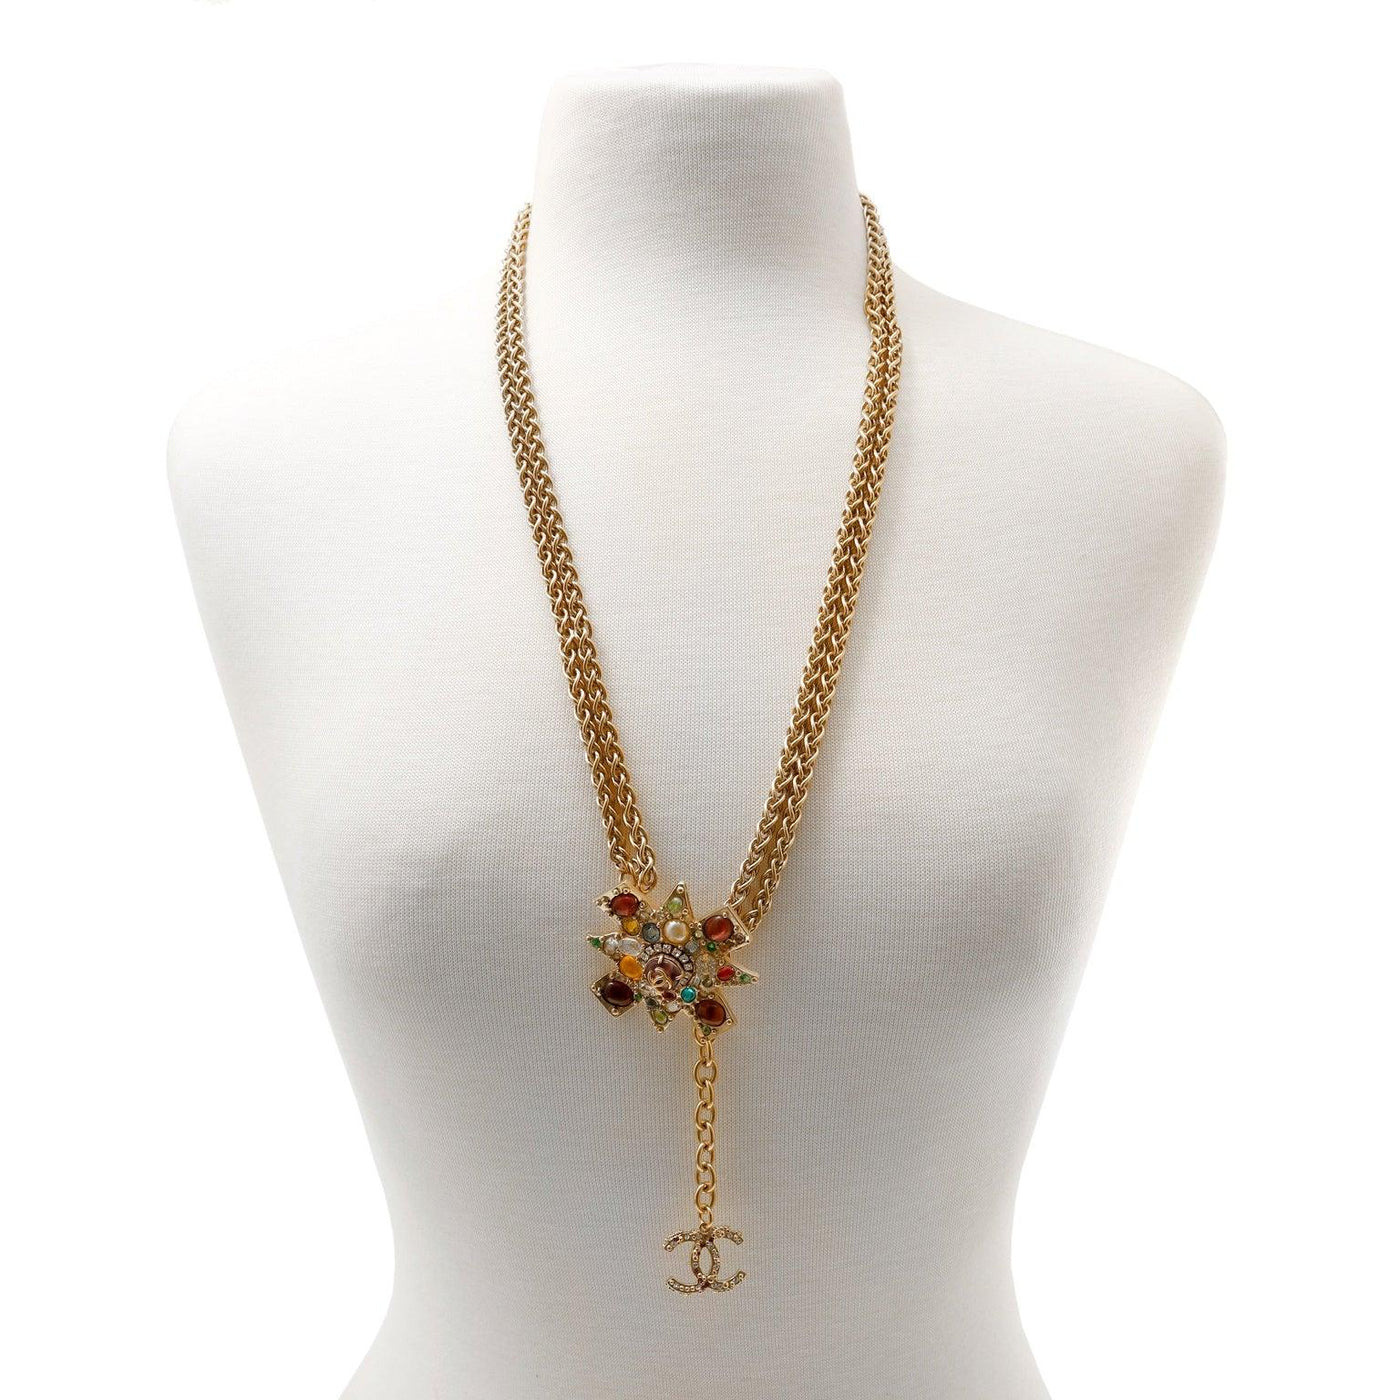 Chanel Byzantine Gripoix Star Necklace - Only Authentics